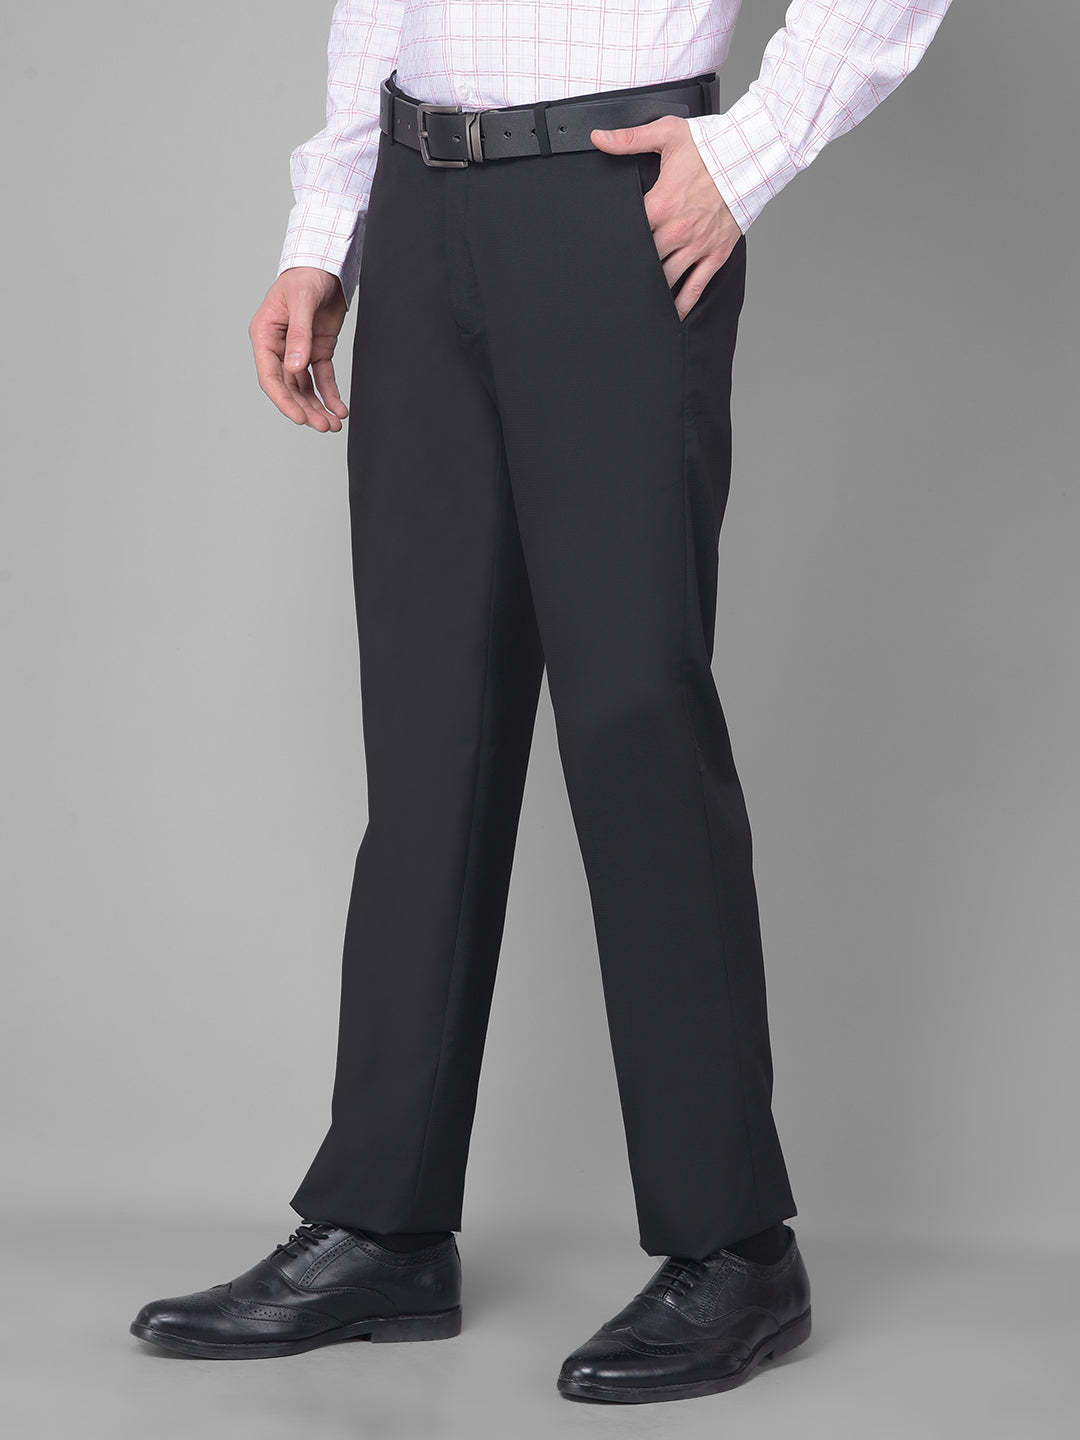 White Linen Regular Fit Formal Trousers, Suit trousers, Business slacks,  Formal slacks, Chinos Set, Men Khaki Set - web box solutions, Baramulla |  ID: 26134240473